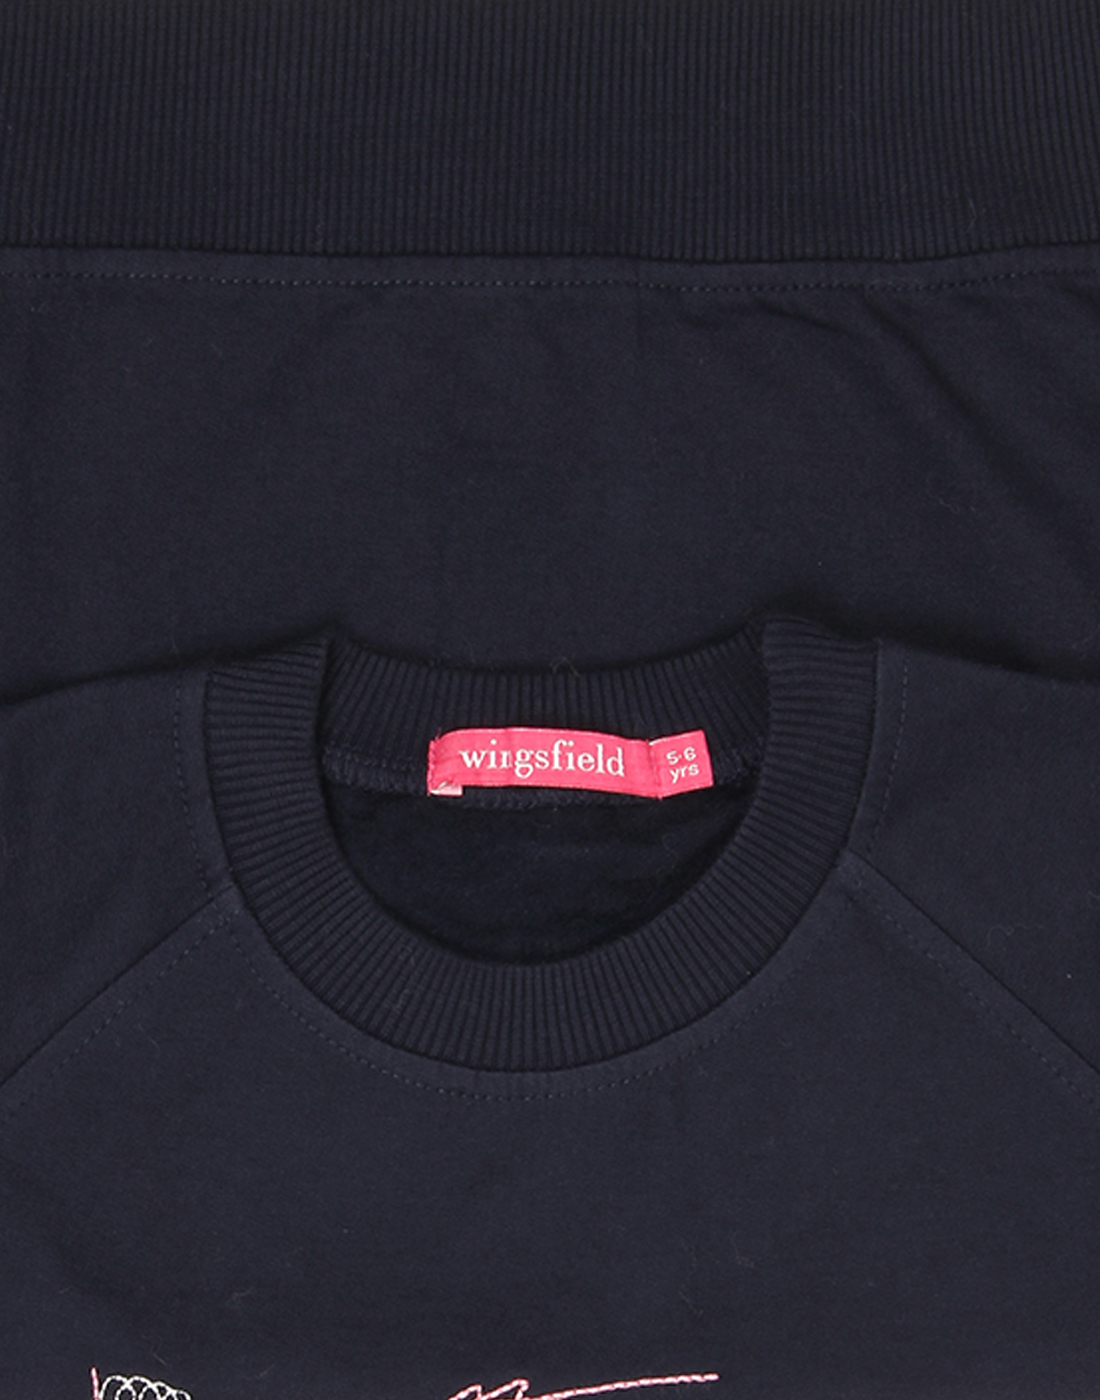 Wingsfield Girls Embroidered Black Sweatshirt